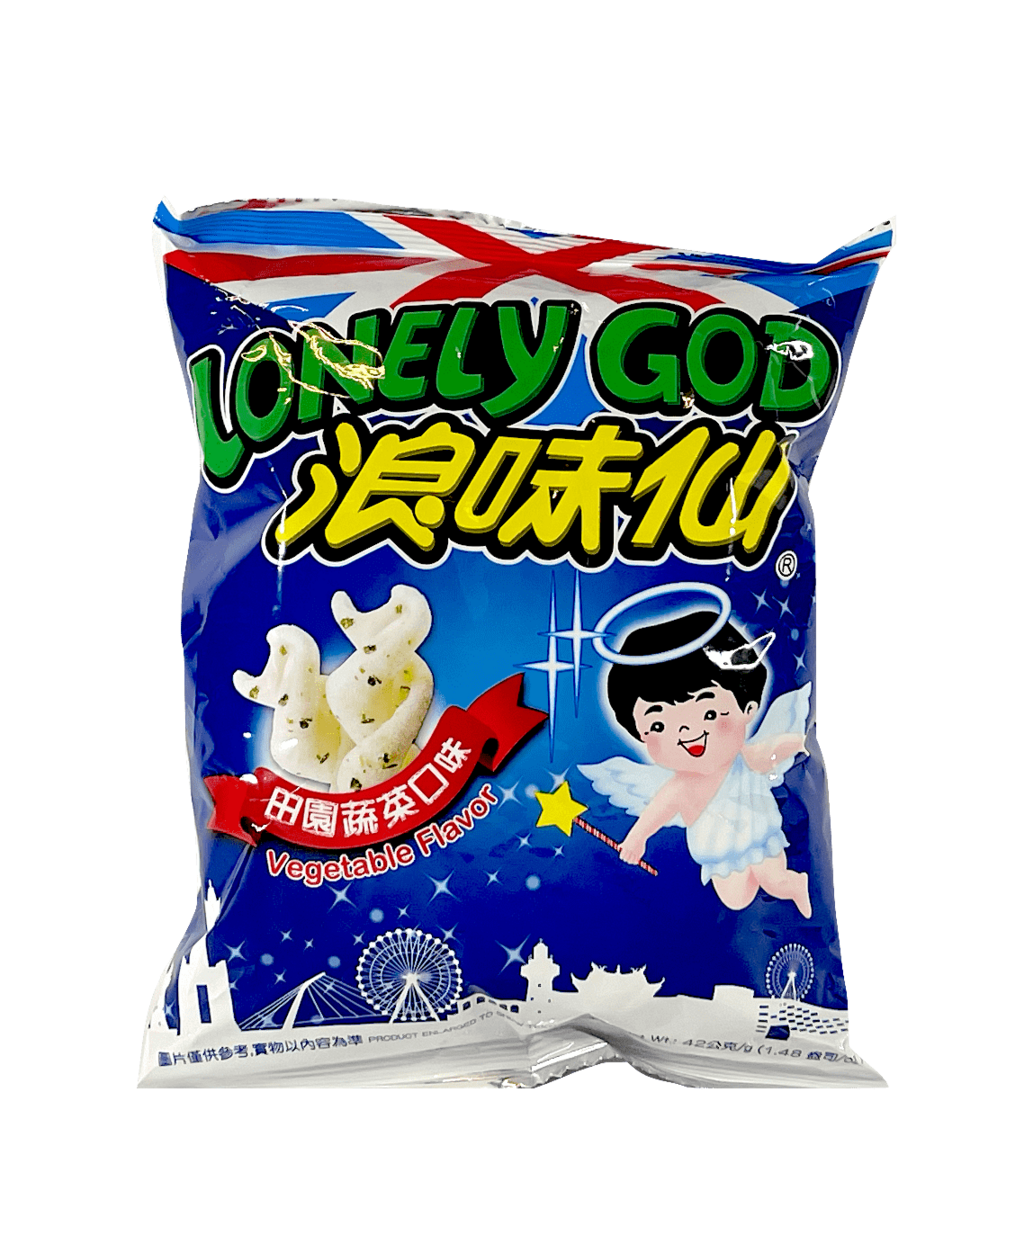 Snacks Med Grönsaker Smak 42g Lonely God Want Want Taiwan